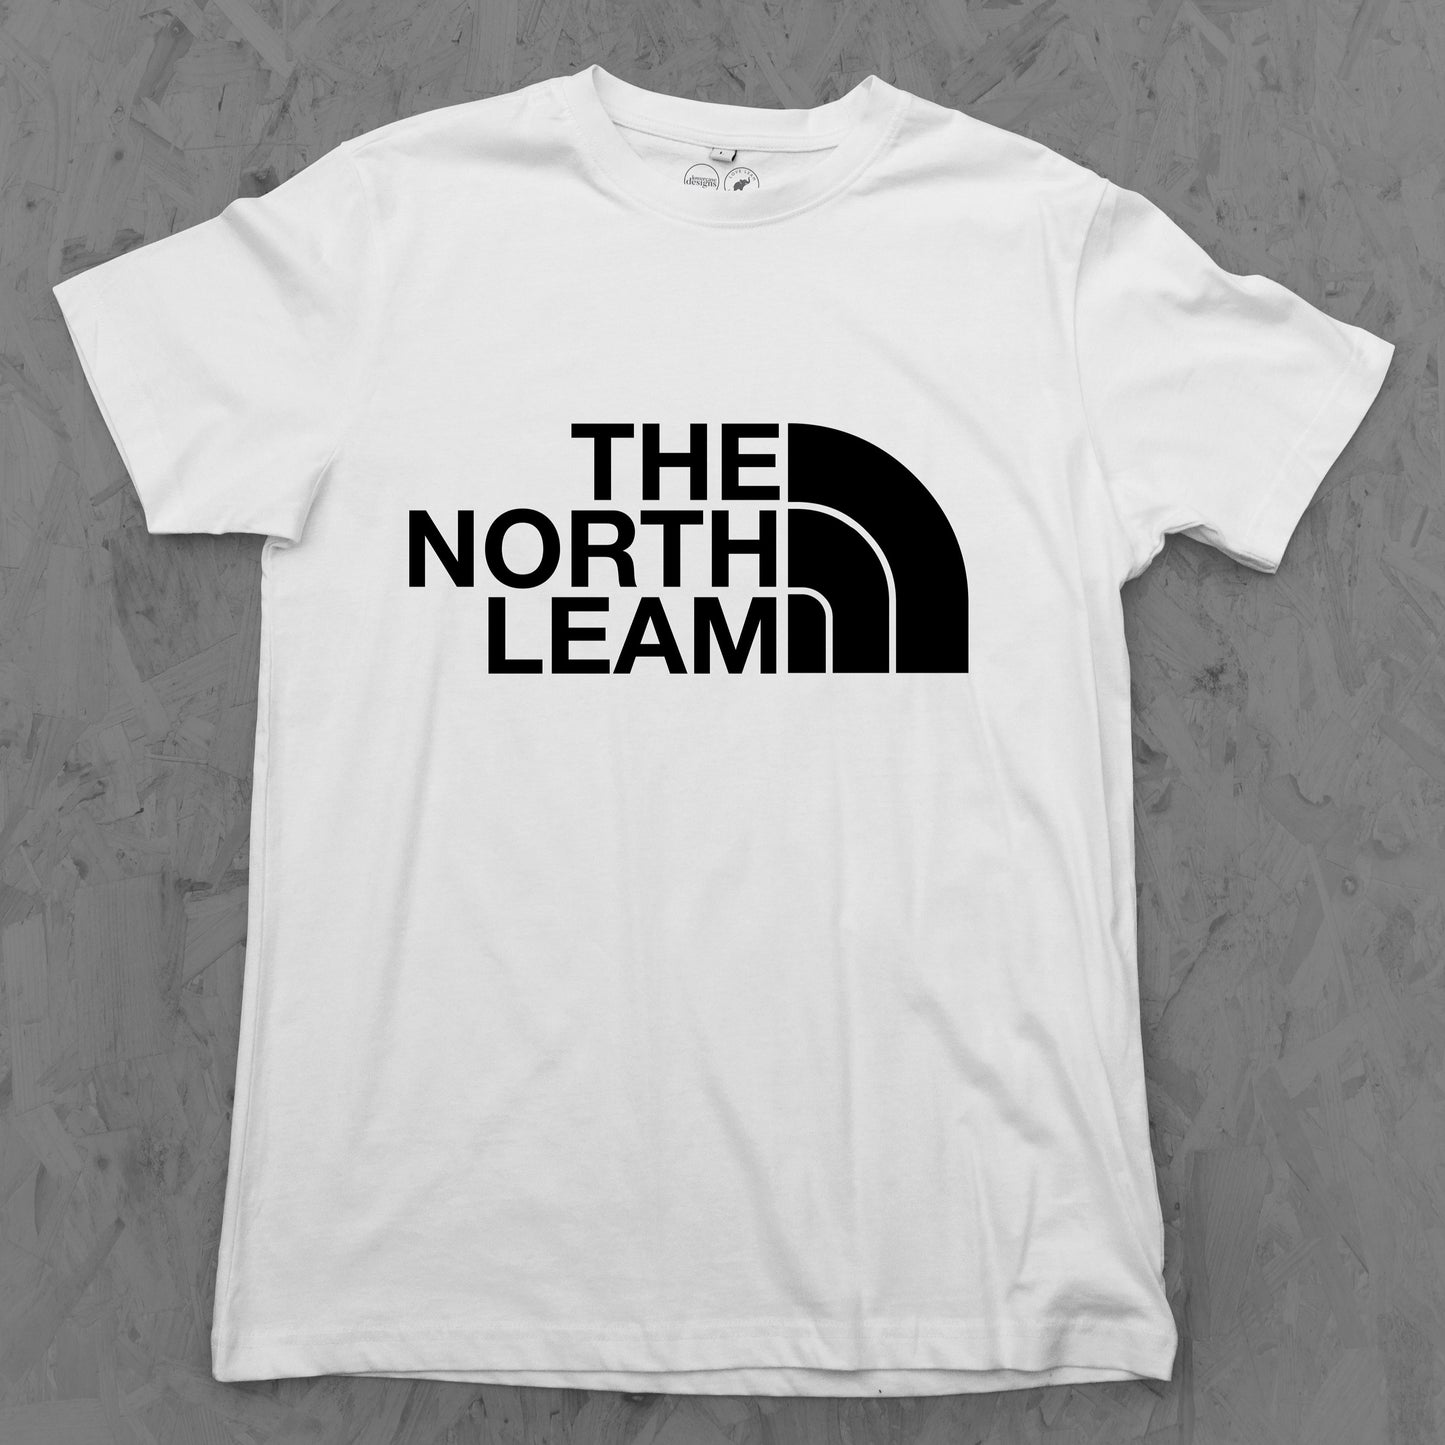 The North Leam Tee